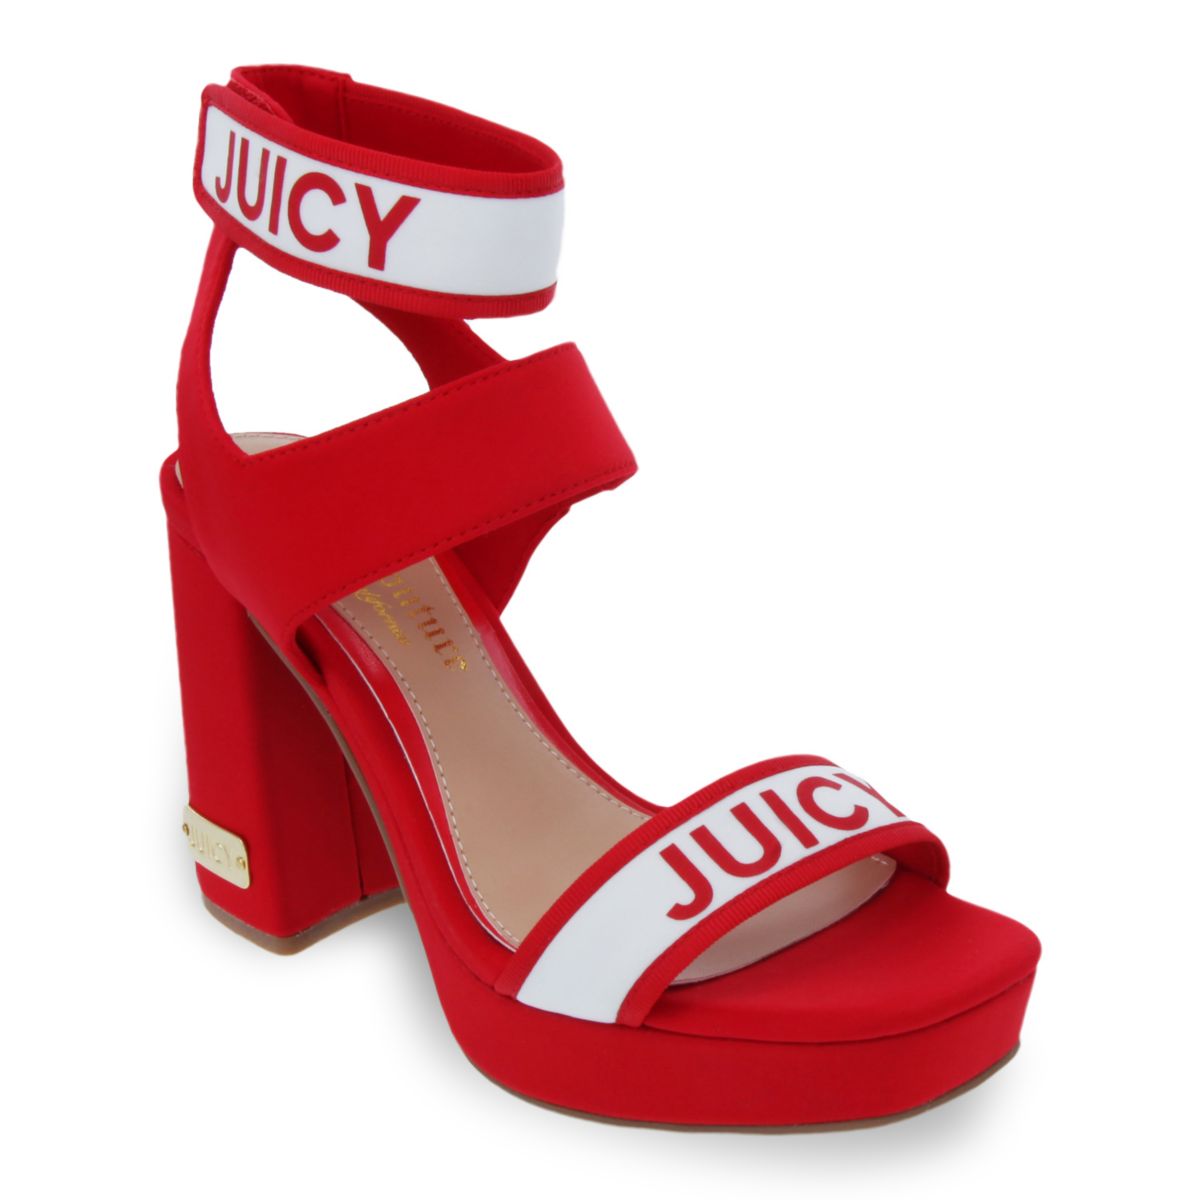 Женские туфли на платформе с блестками Juicy Couture Glisten Juicy Couture